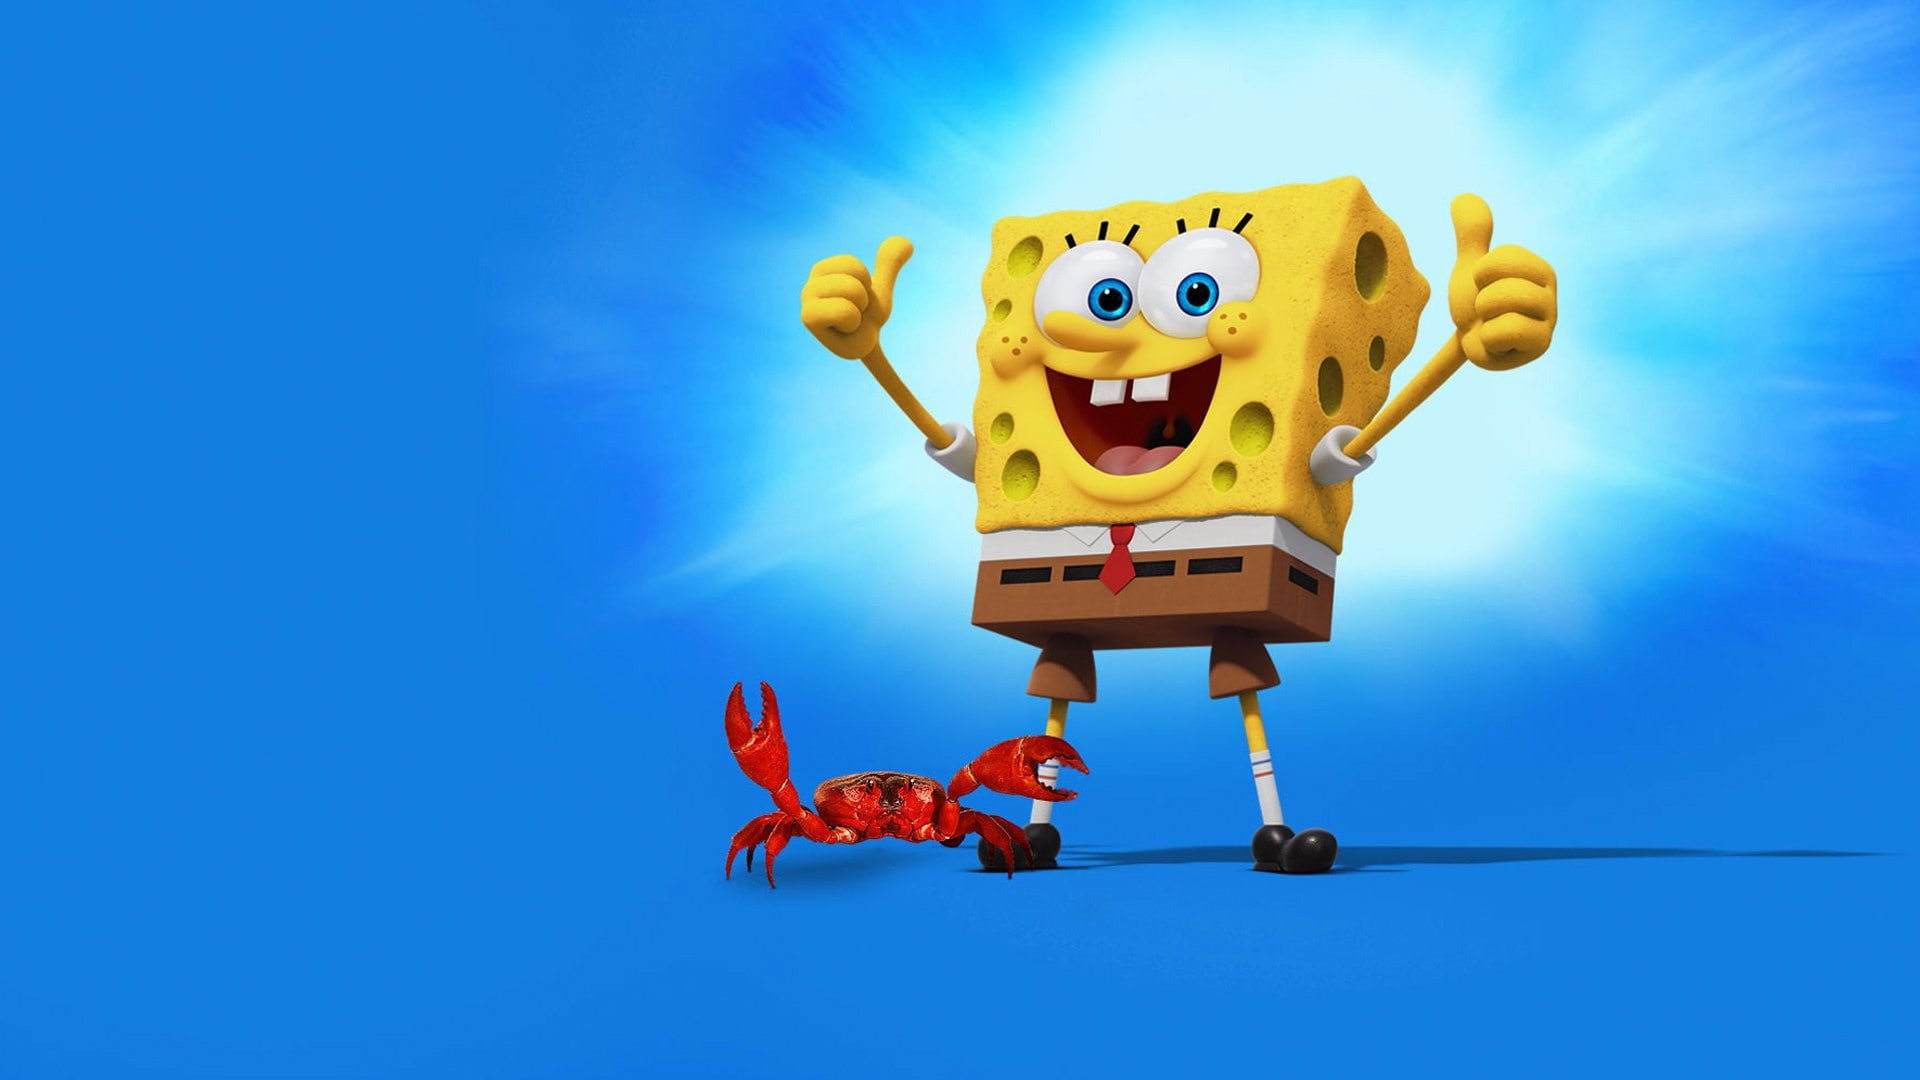 the spongebob movie sponge out of water